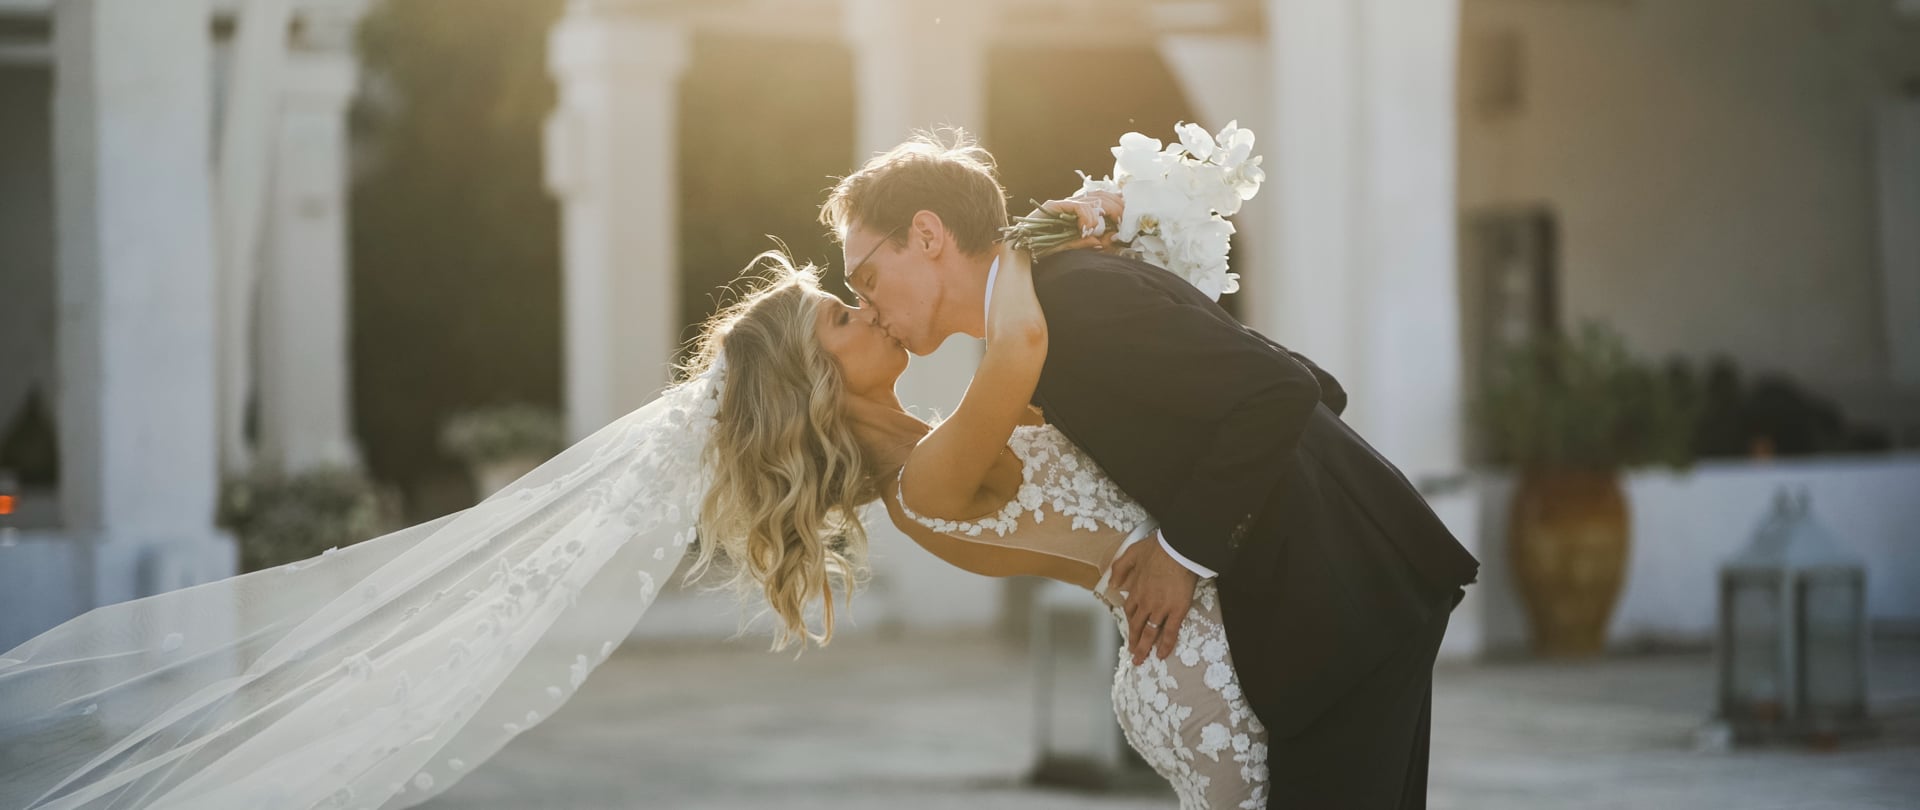 Tori & Ben Wedding Video Filmed atPuglia,Italy